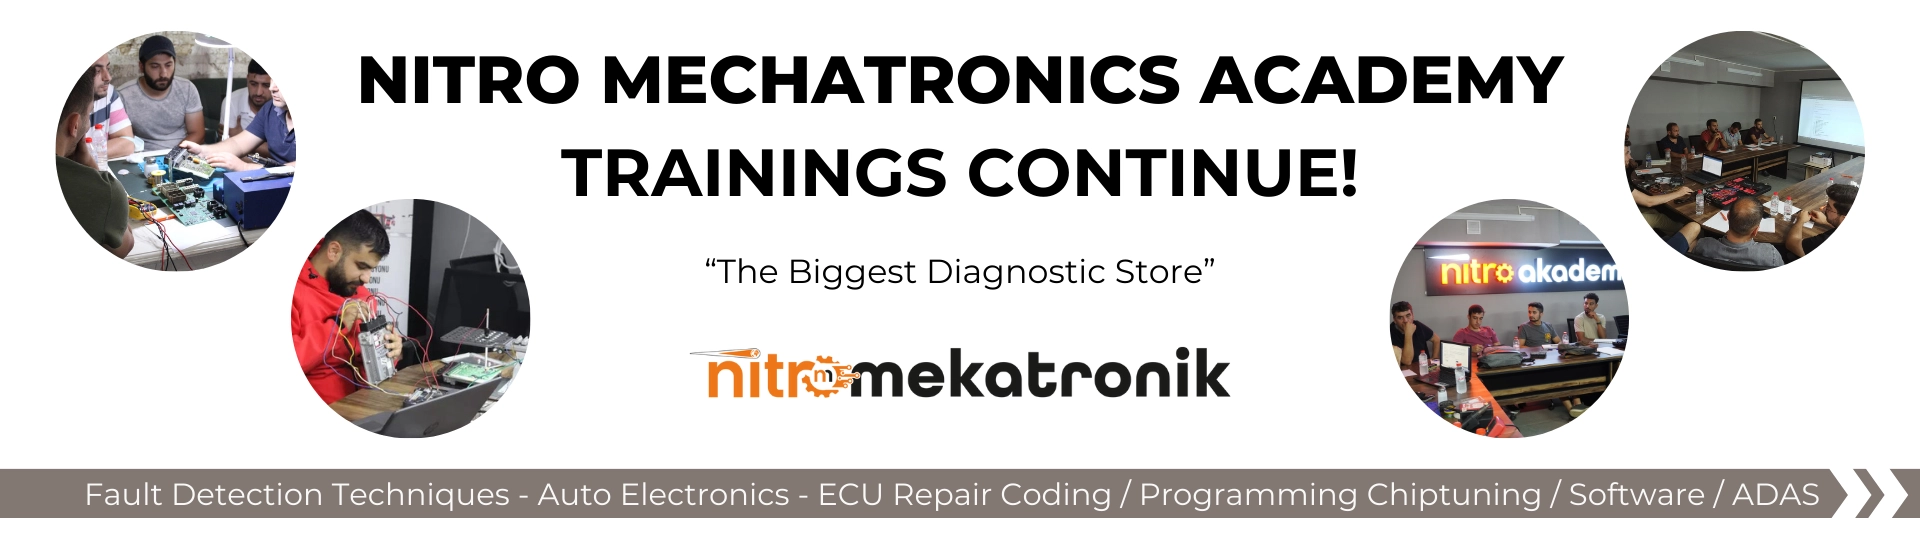 nitro-mechatronics-academy-trainings-continue-en